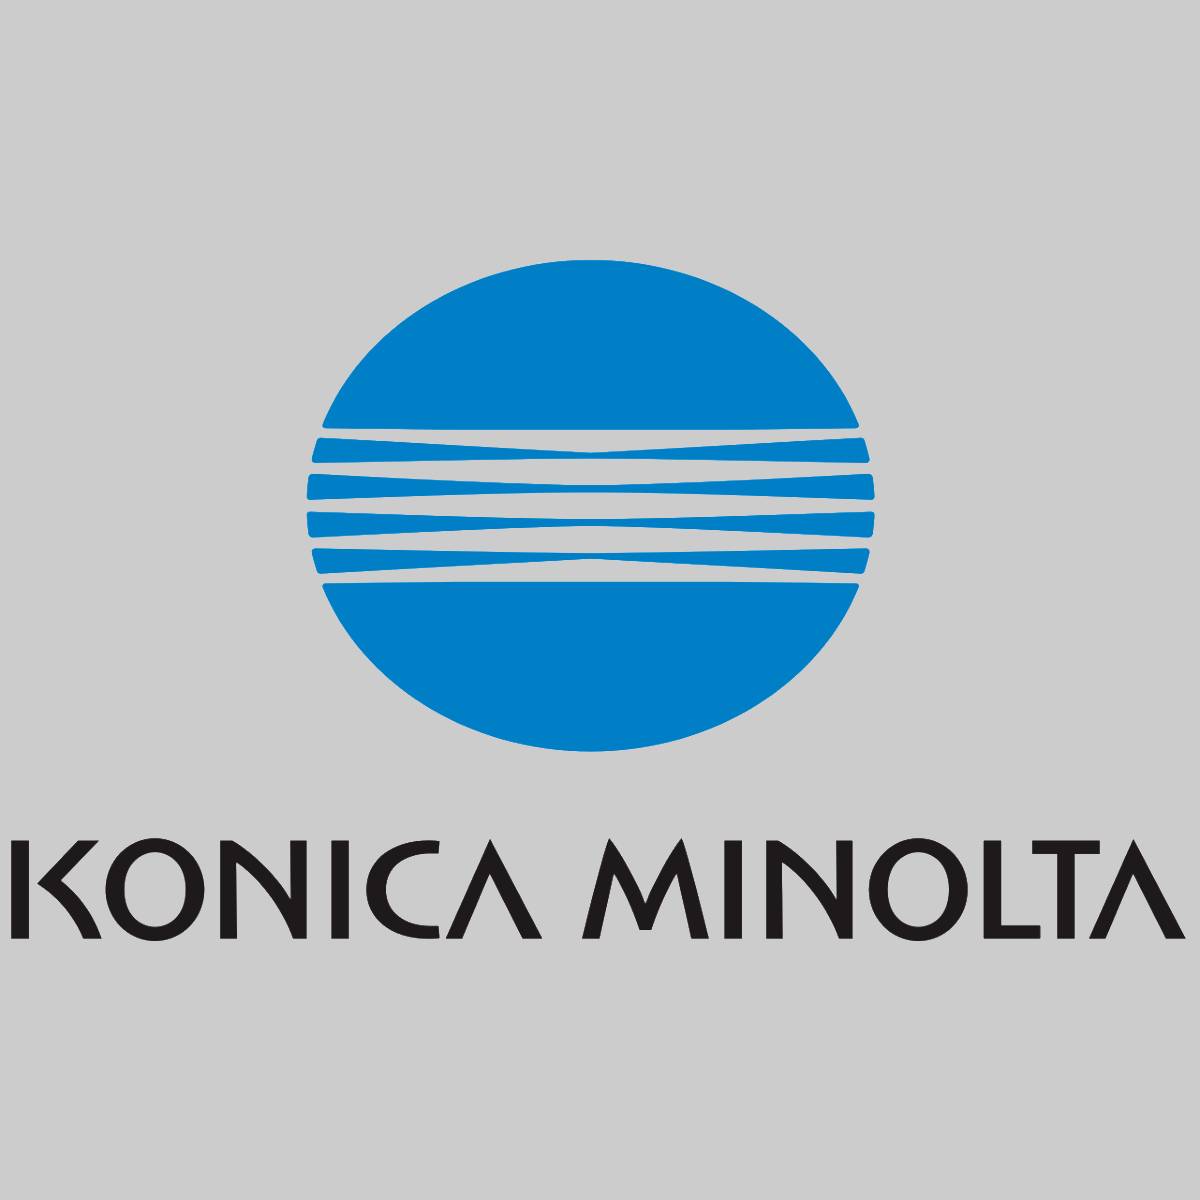 "Original Konica Minolta WX 107 Waste Toner Box AAVA-WY1 für C250i C300i C320i